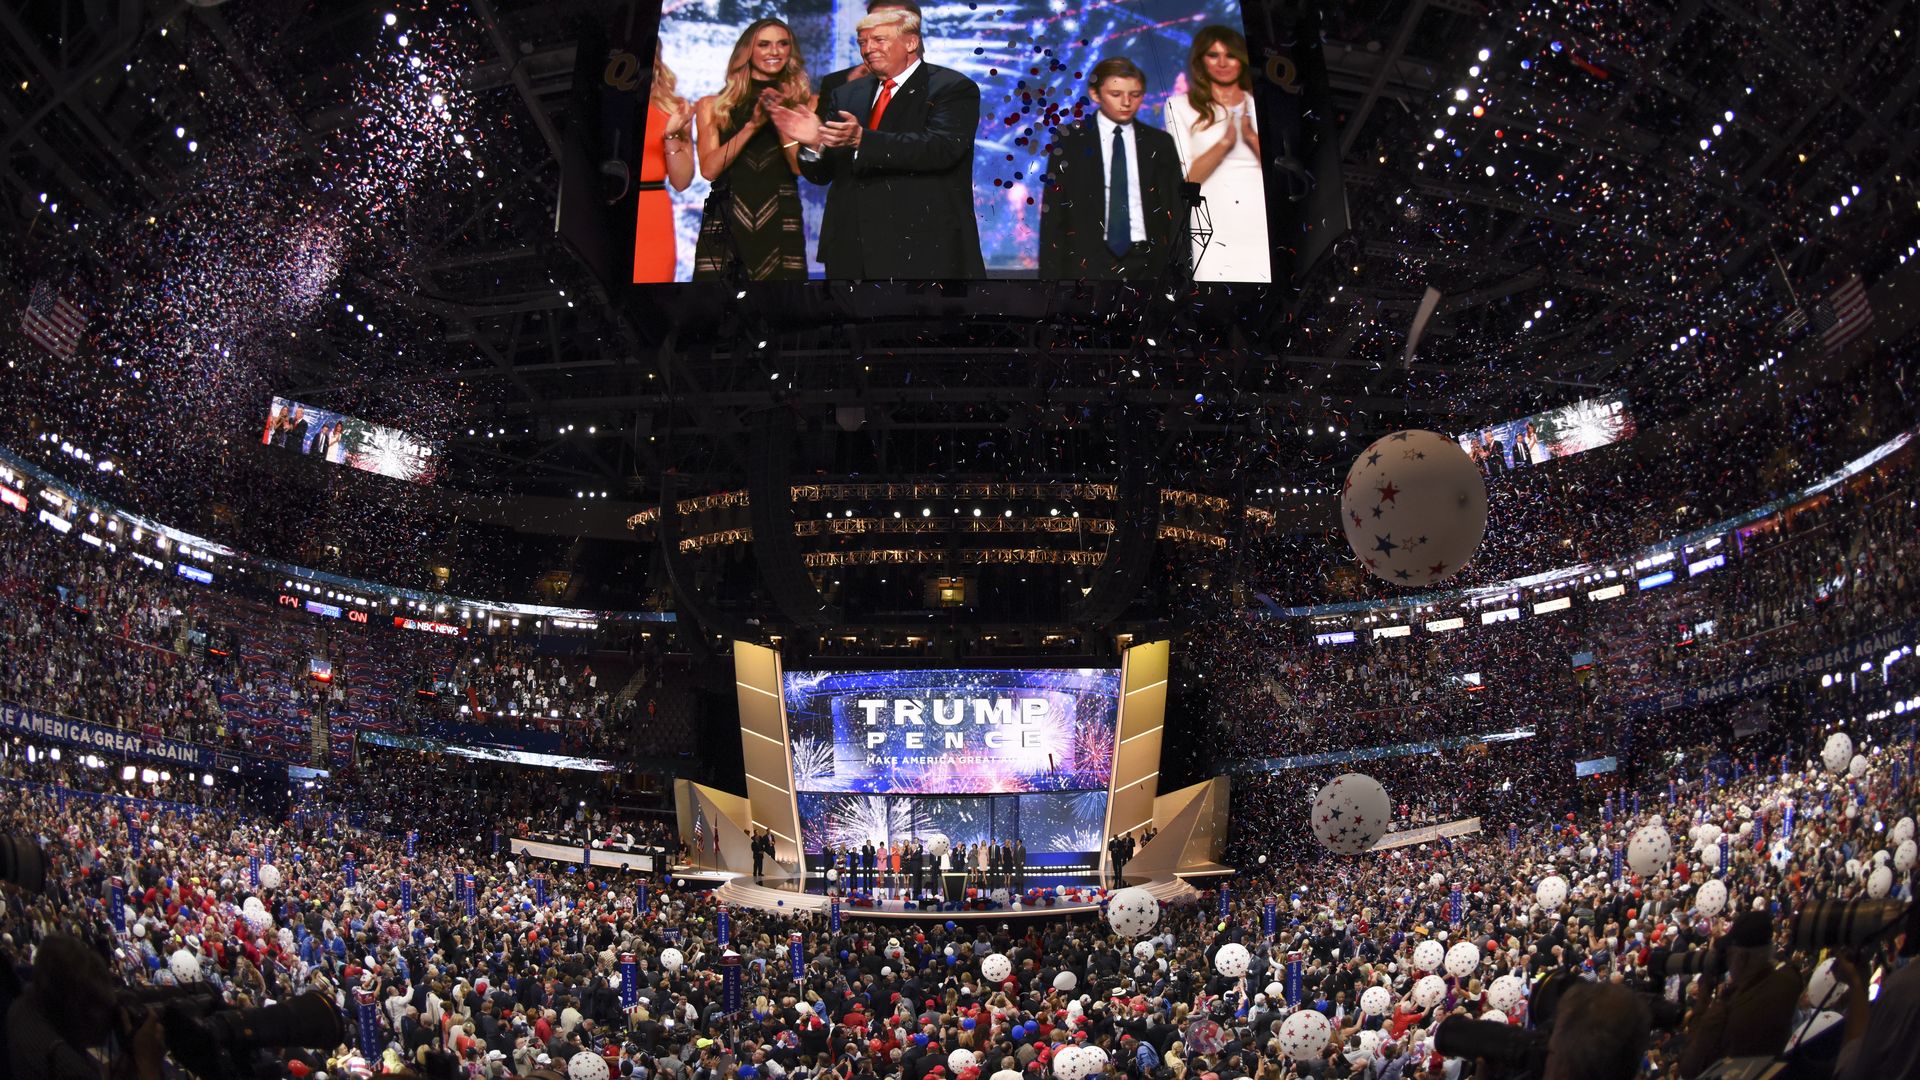 Trump and family at 2016 RNC